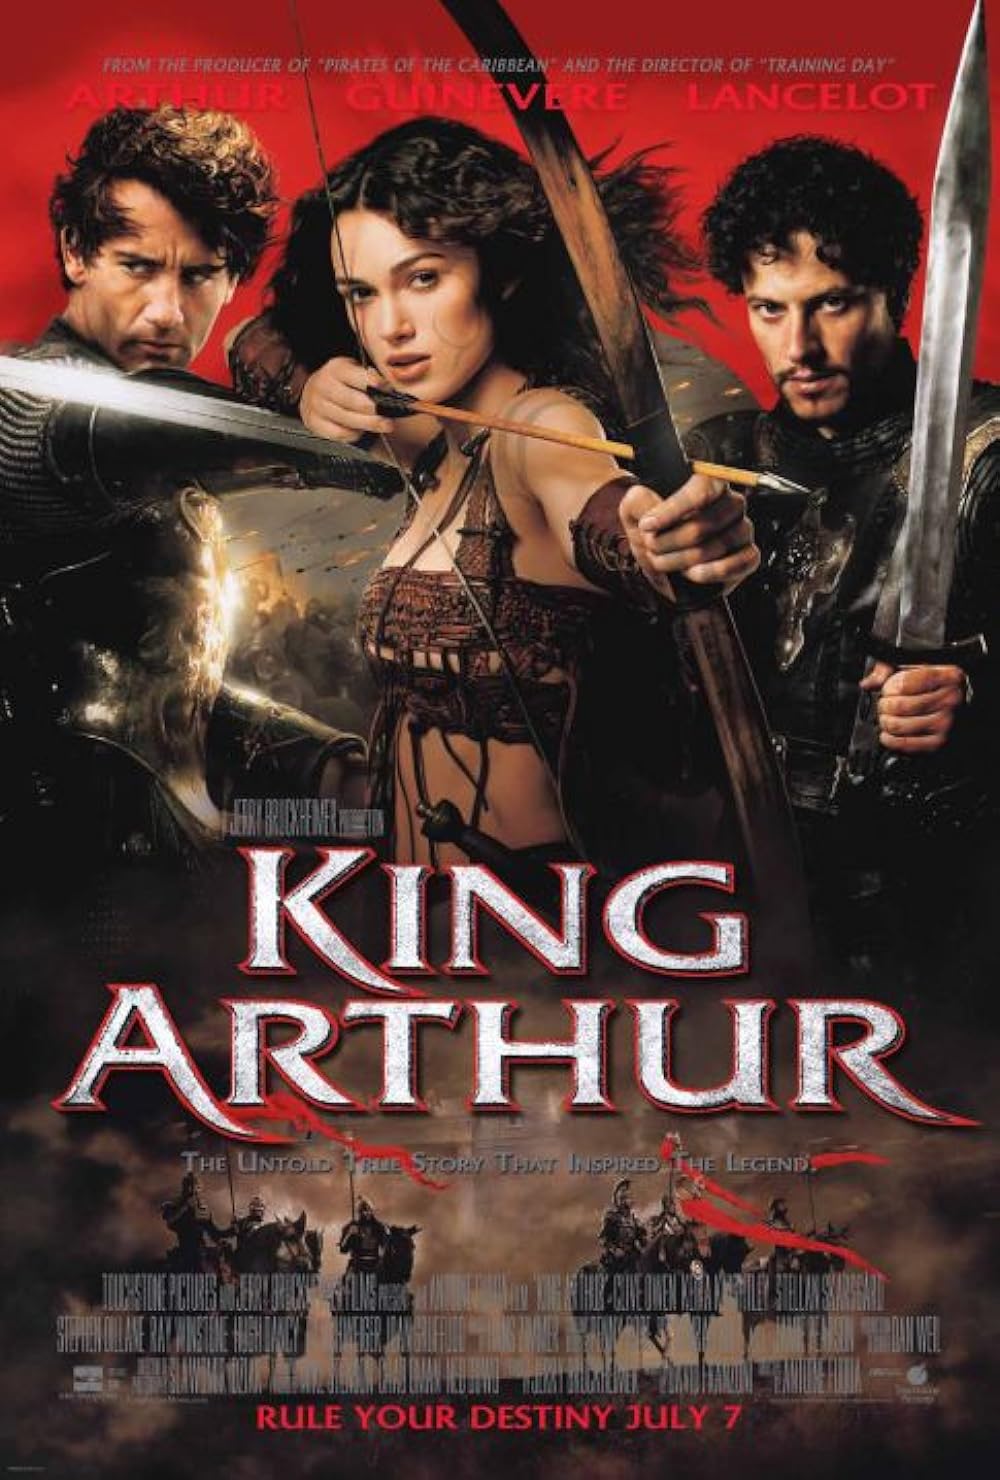 King Arthur (2004) Theatrical Cut 256Kbps 23.976Fps 48Khz 5.1Ch Disney+ DD+ E-AC3 Turkish Audio TAC